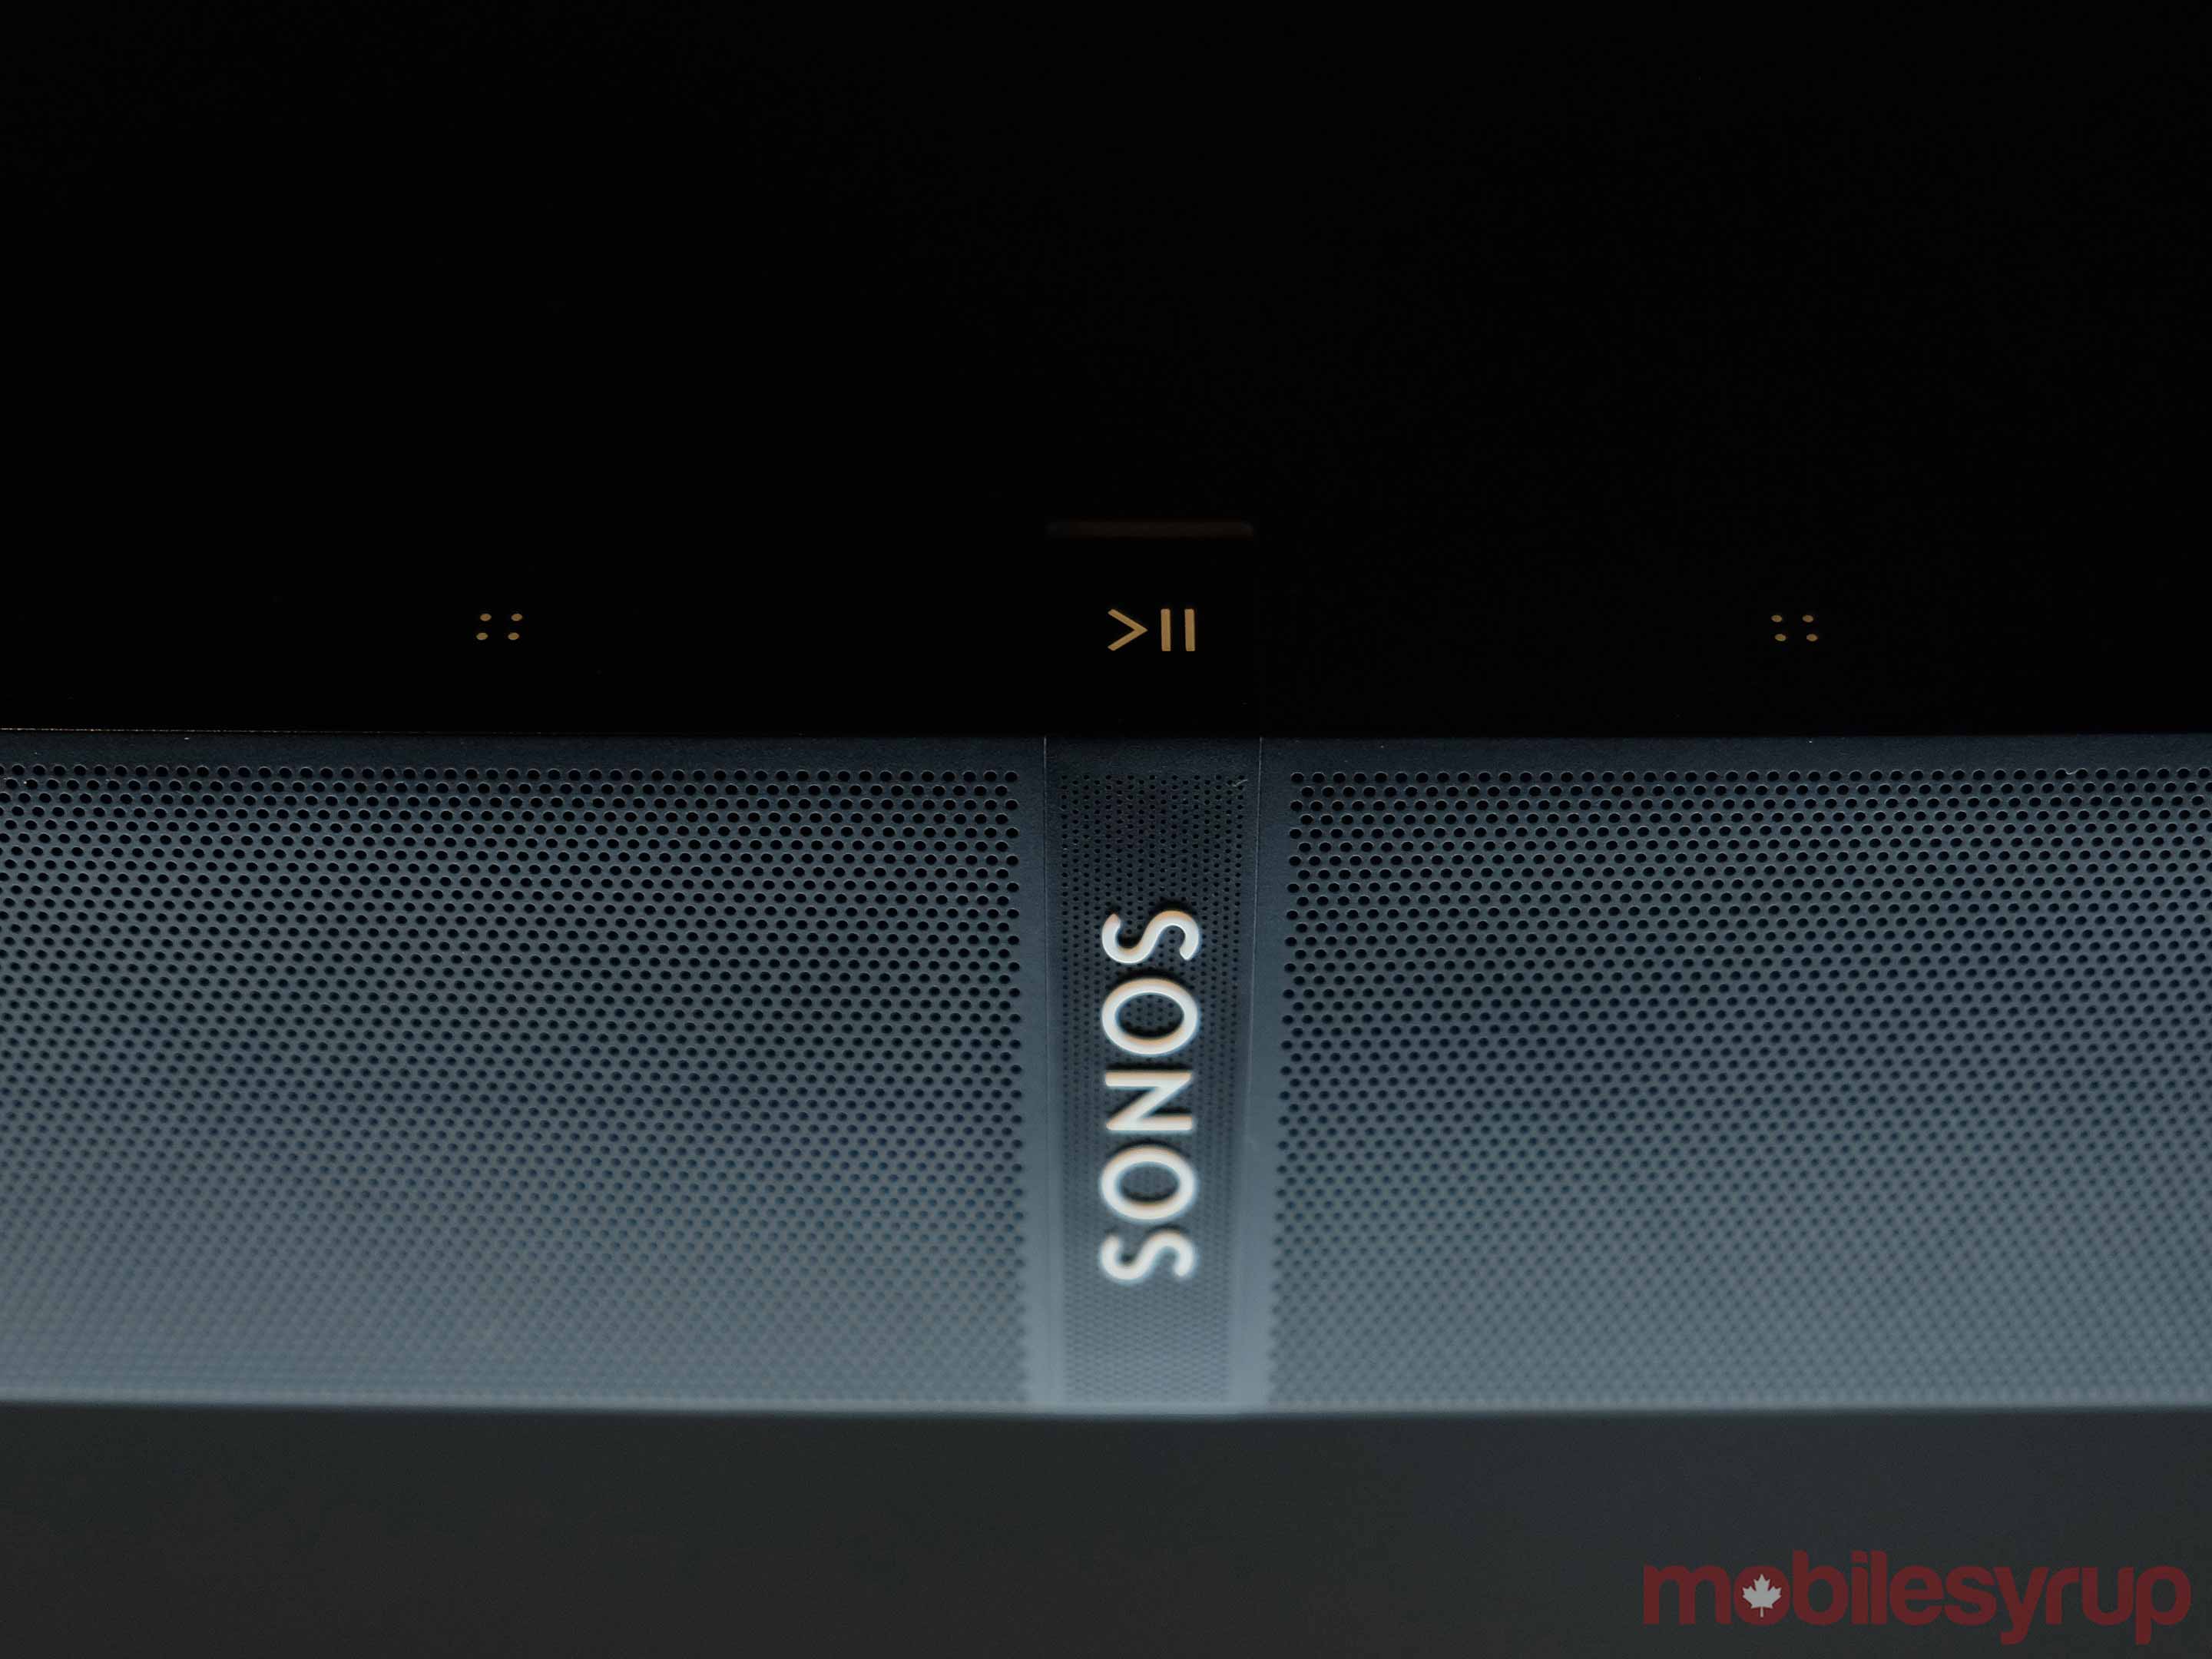 Sonos Playbase front